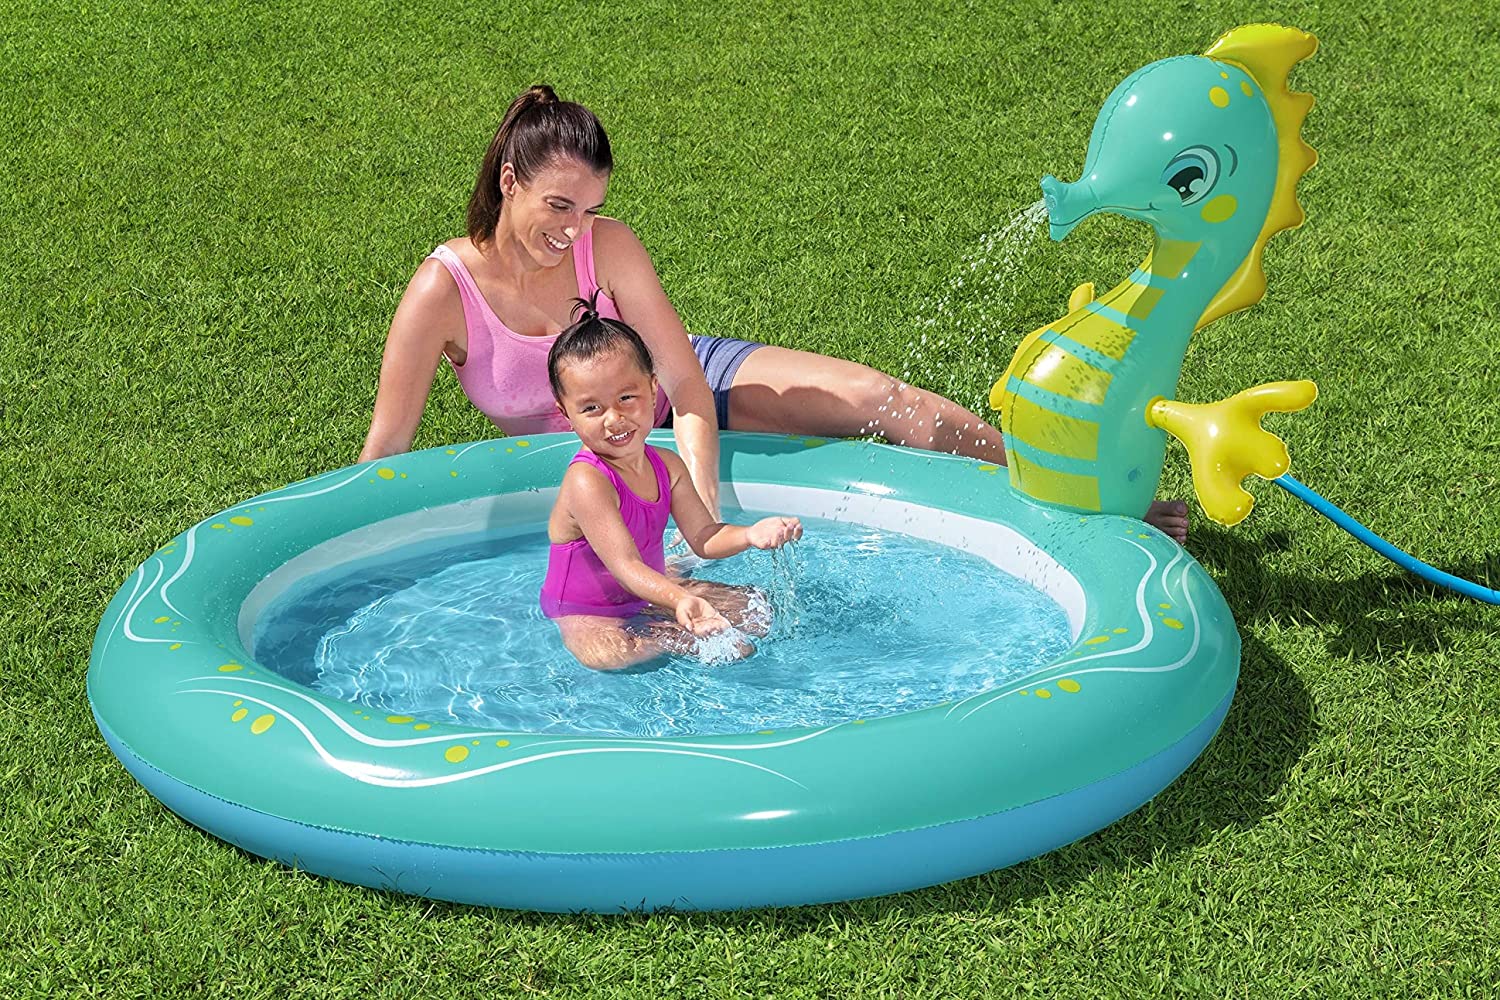 Seahorse Sprinkler Pool (6'2" x 63" x 34"/1.88m x 1.60m x 86cm)